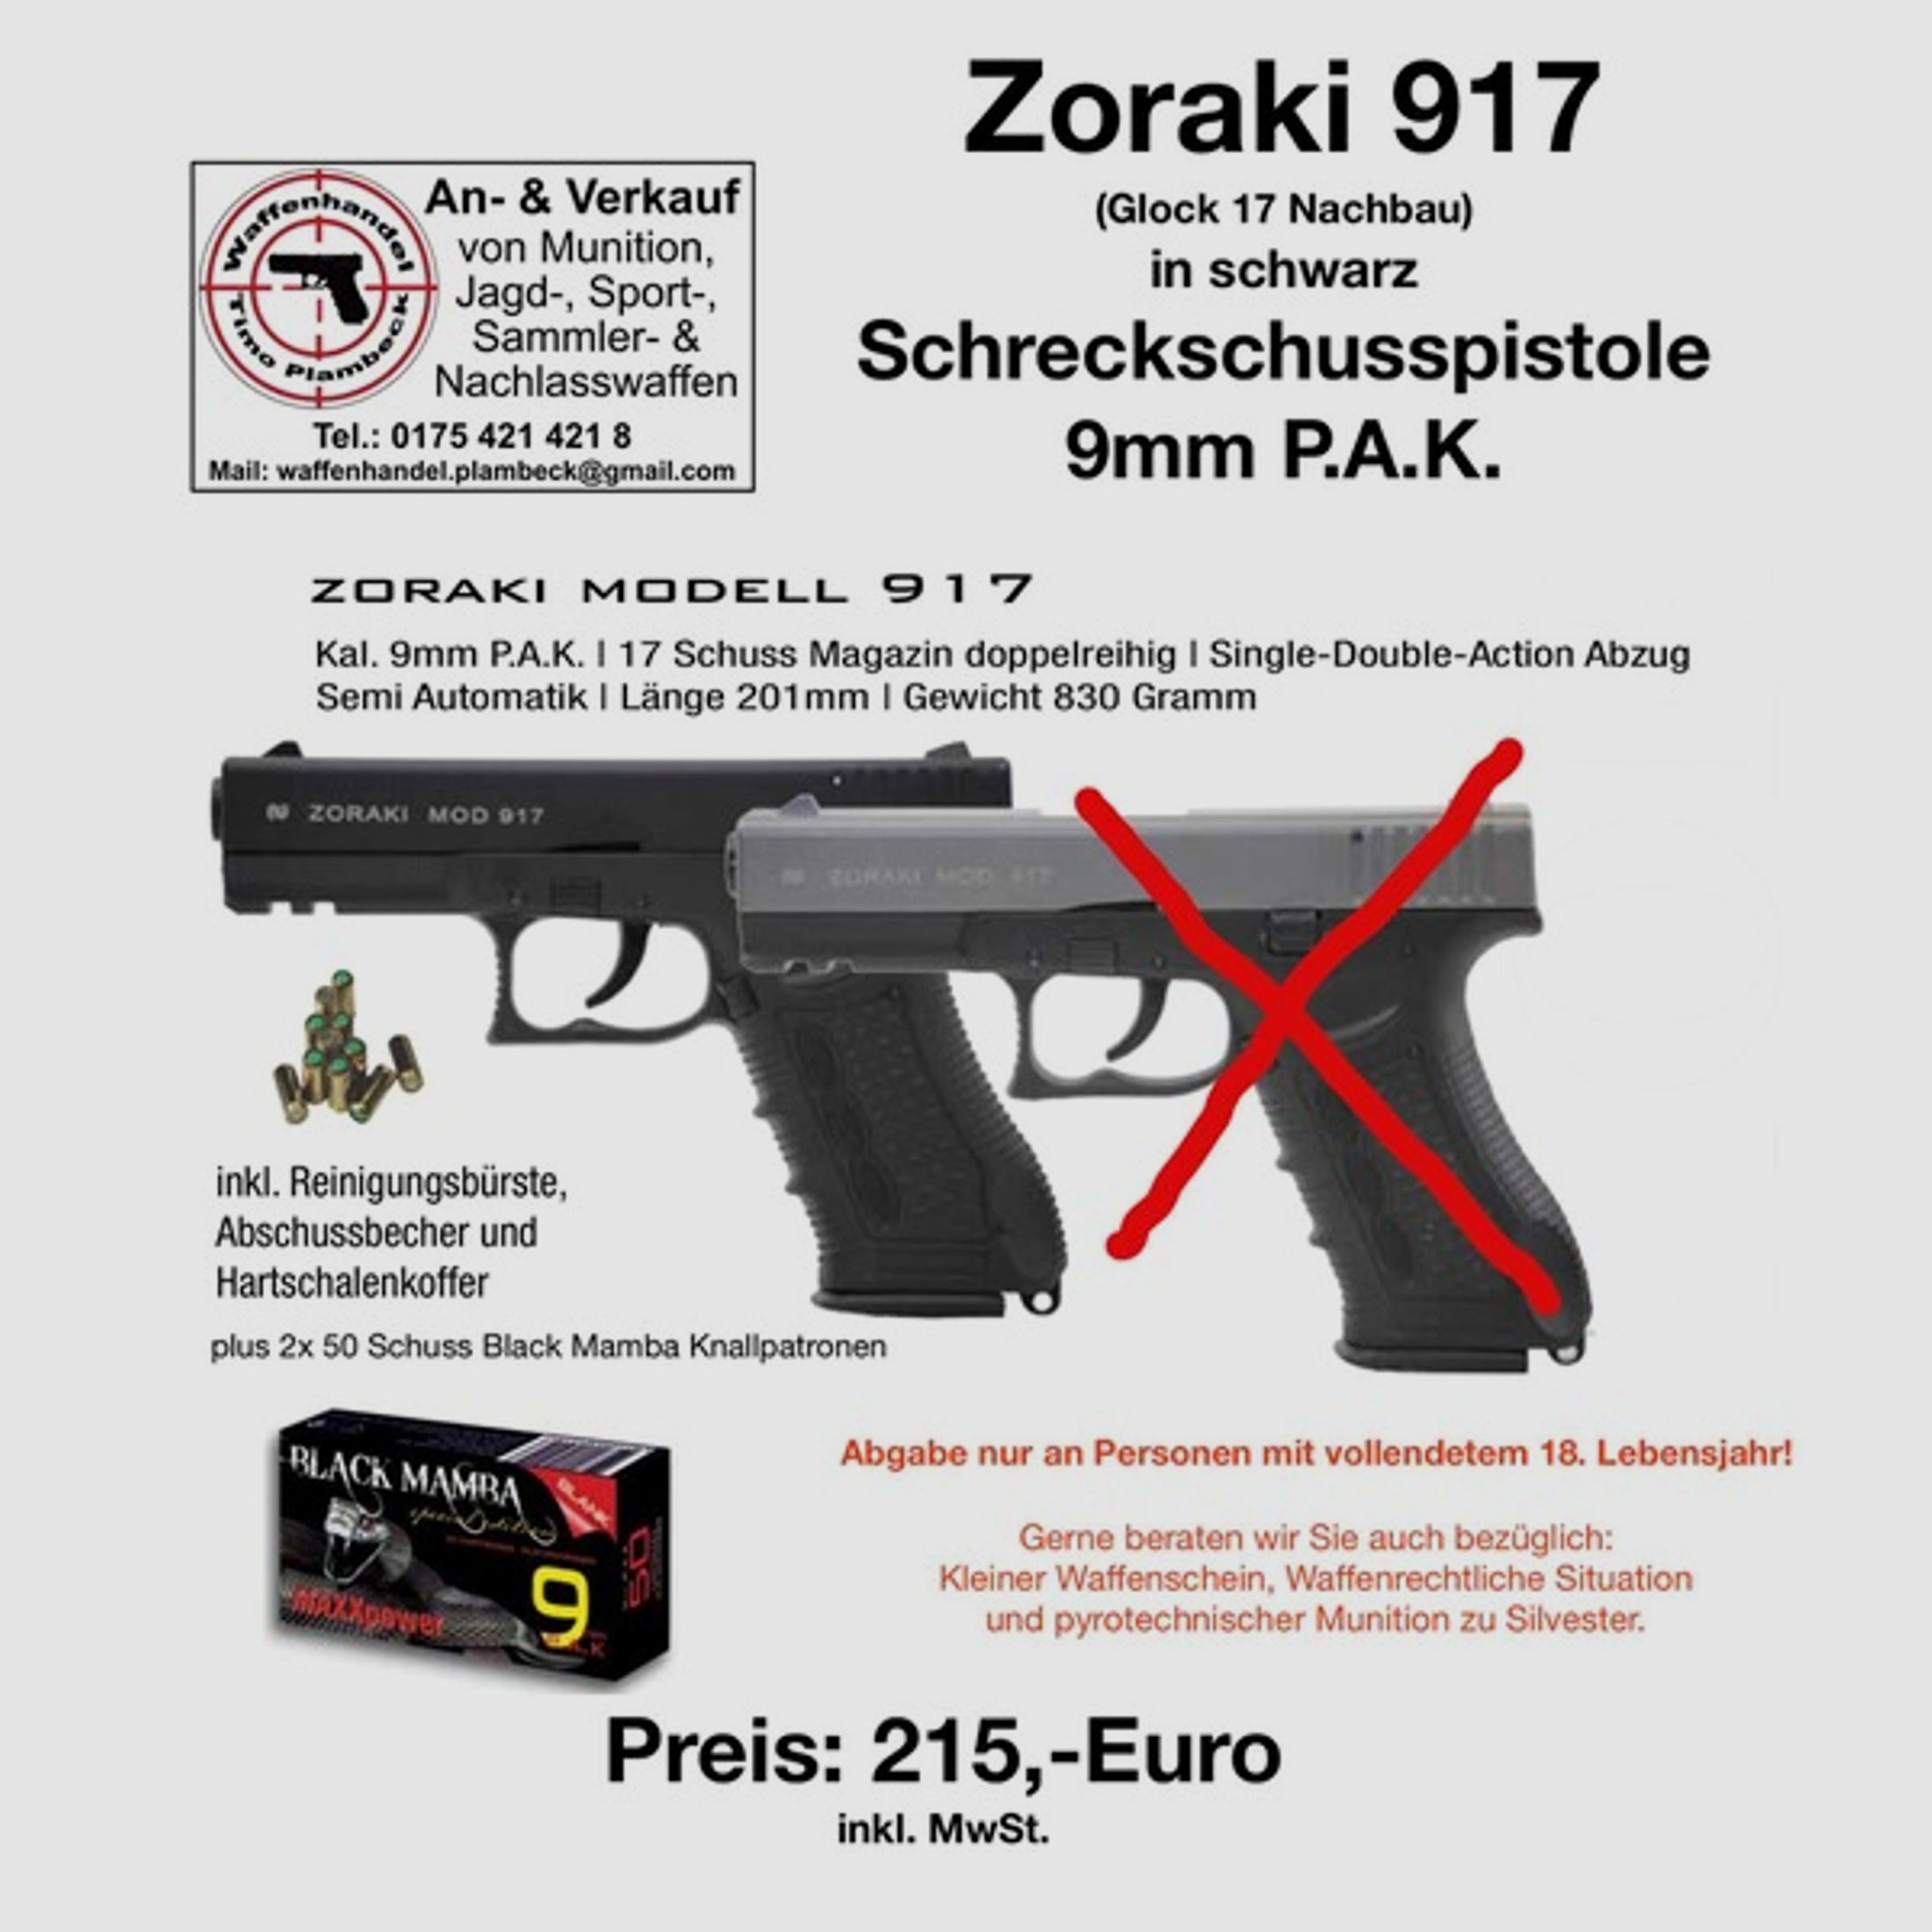 ZORAKI Model 917 schwarz  im Kaliber 9mm P.A.K.  mit 100 Schuss Black Mamba Knallpatronen